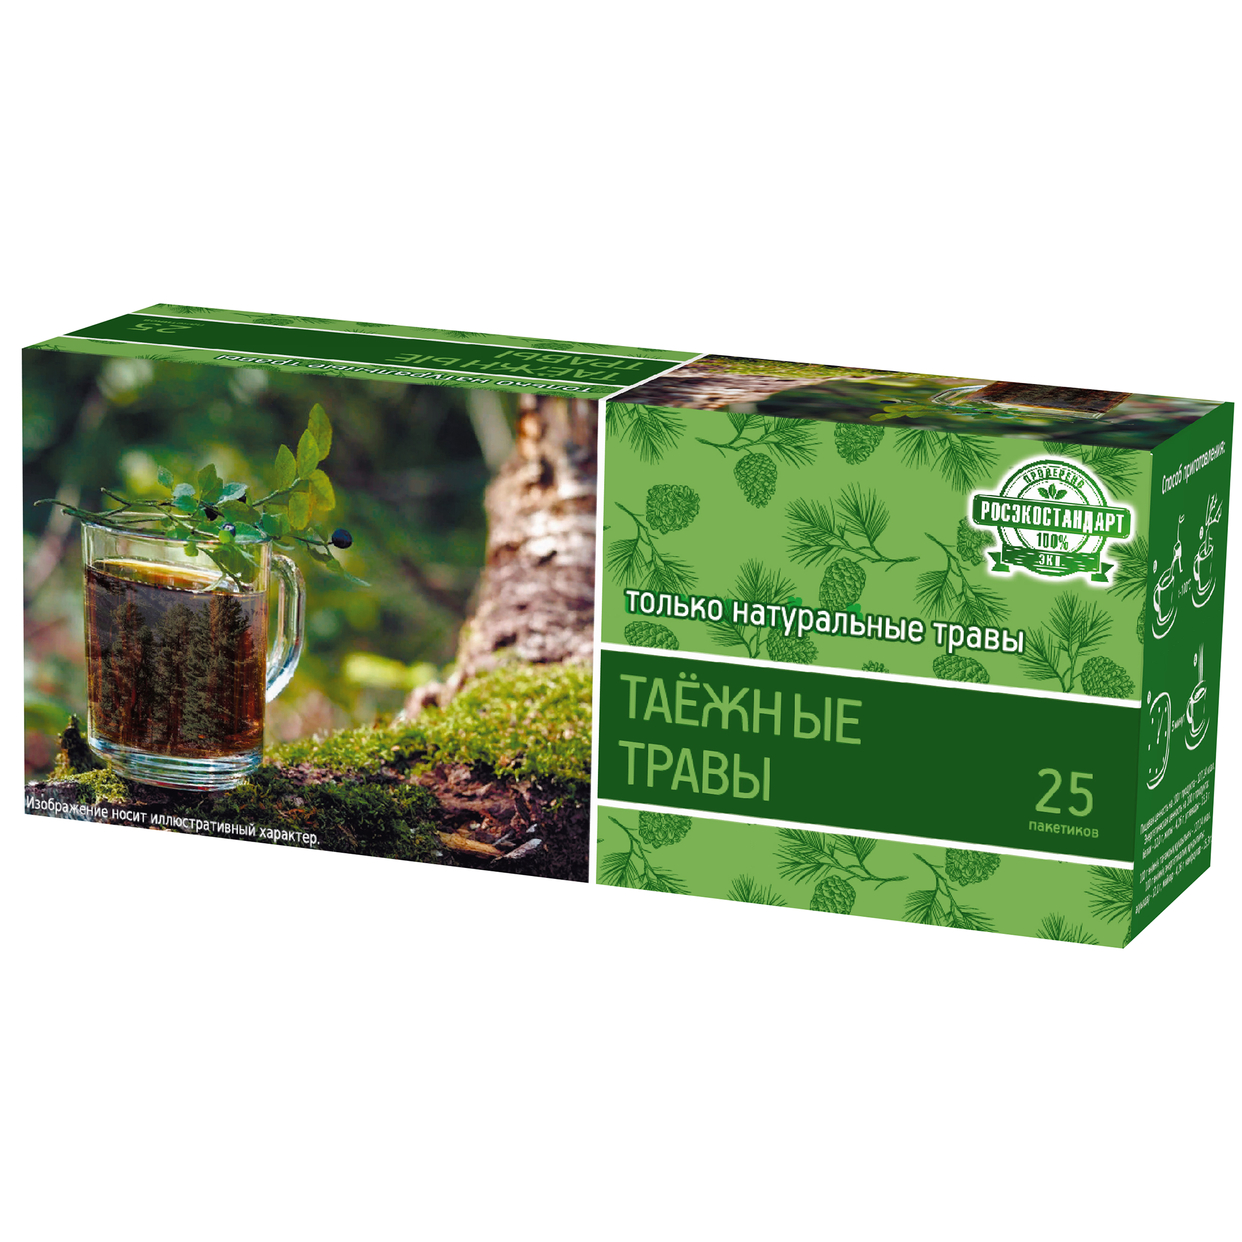 Напиток чайный "Таежные травы" пакетированный, 25 пак, 37,5 г